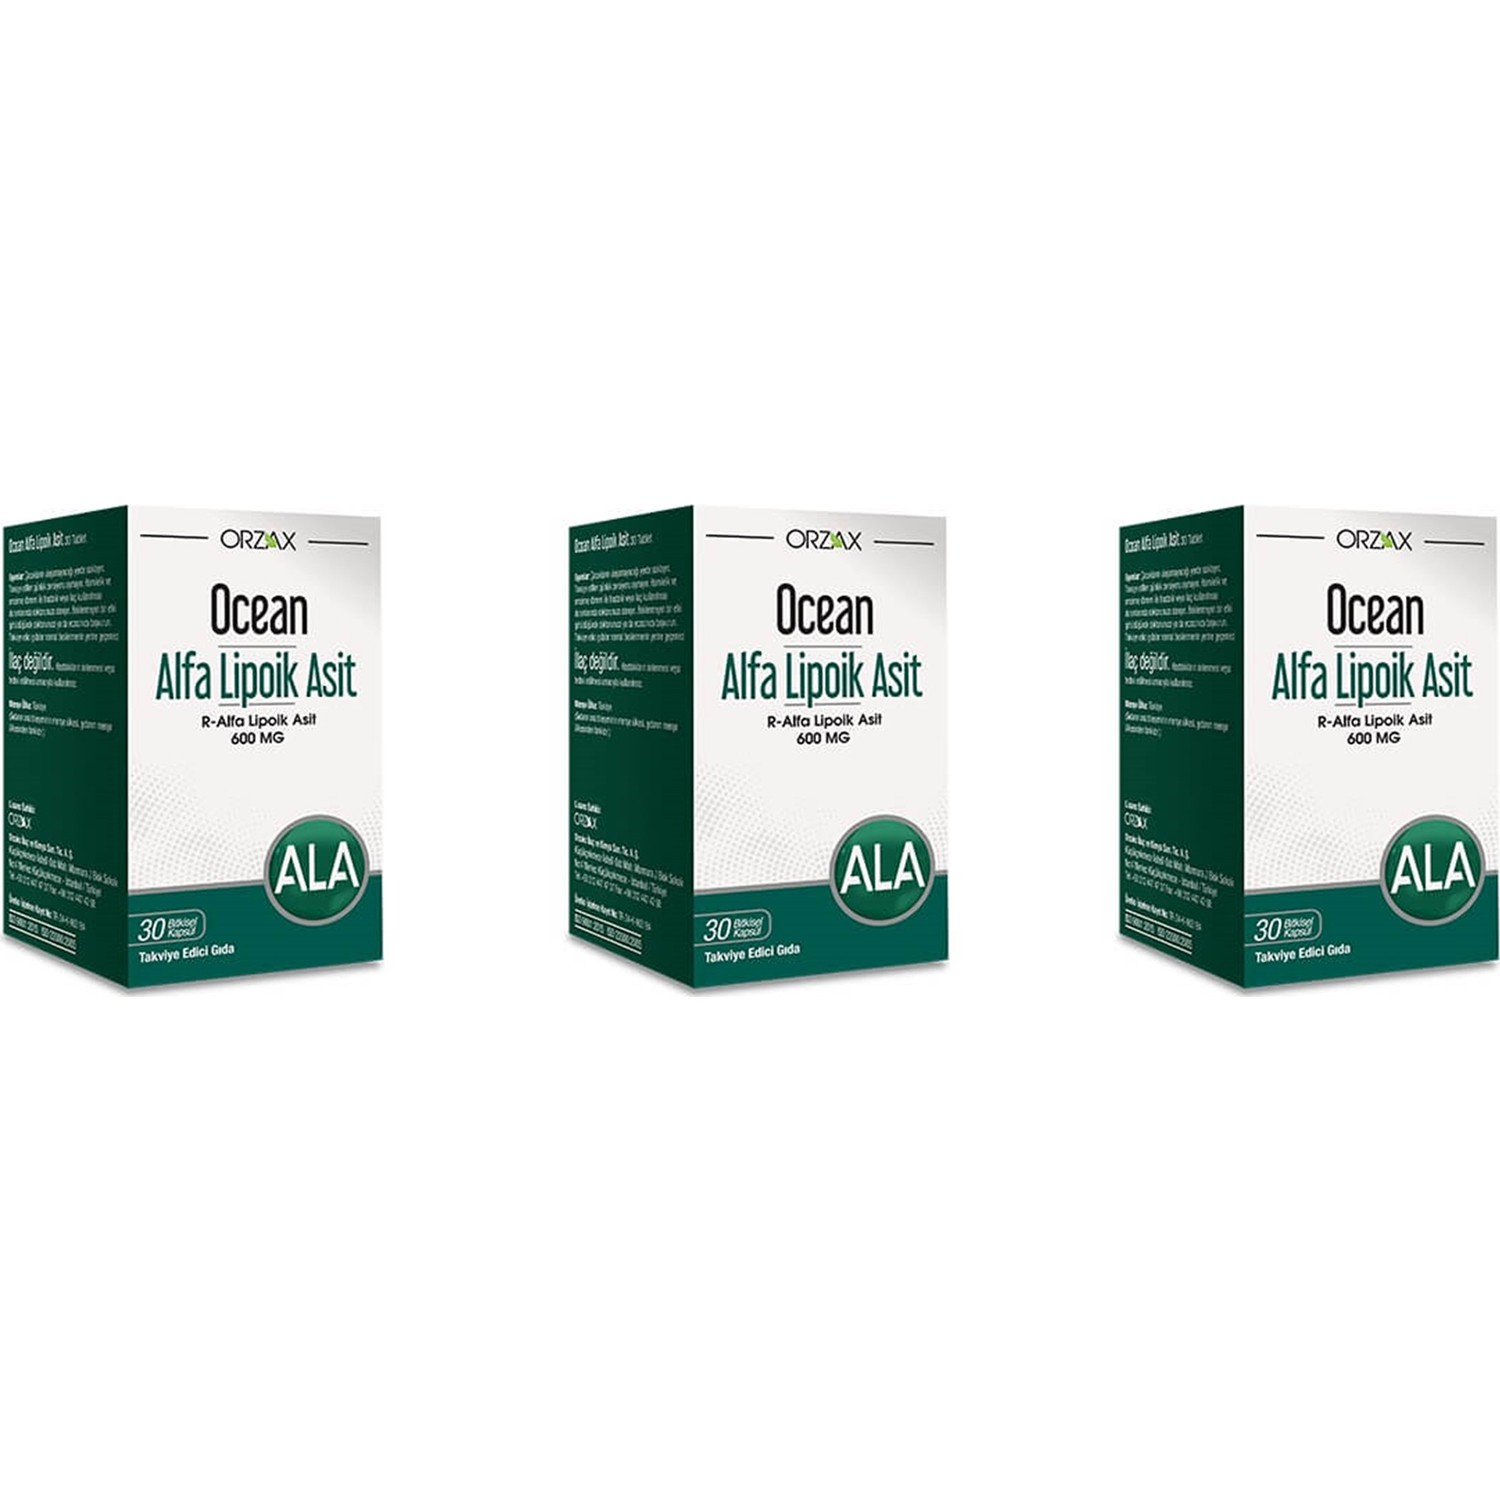 биологически активная добавка solgar alpha lipoic acid 60 mg в капсулах 30 шт Альфа-липоевая кислота Orzax 600 мг, 3 упаковки по 30 капсул